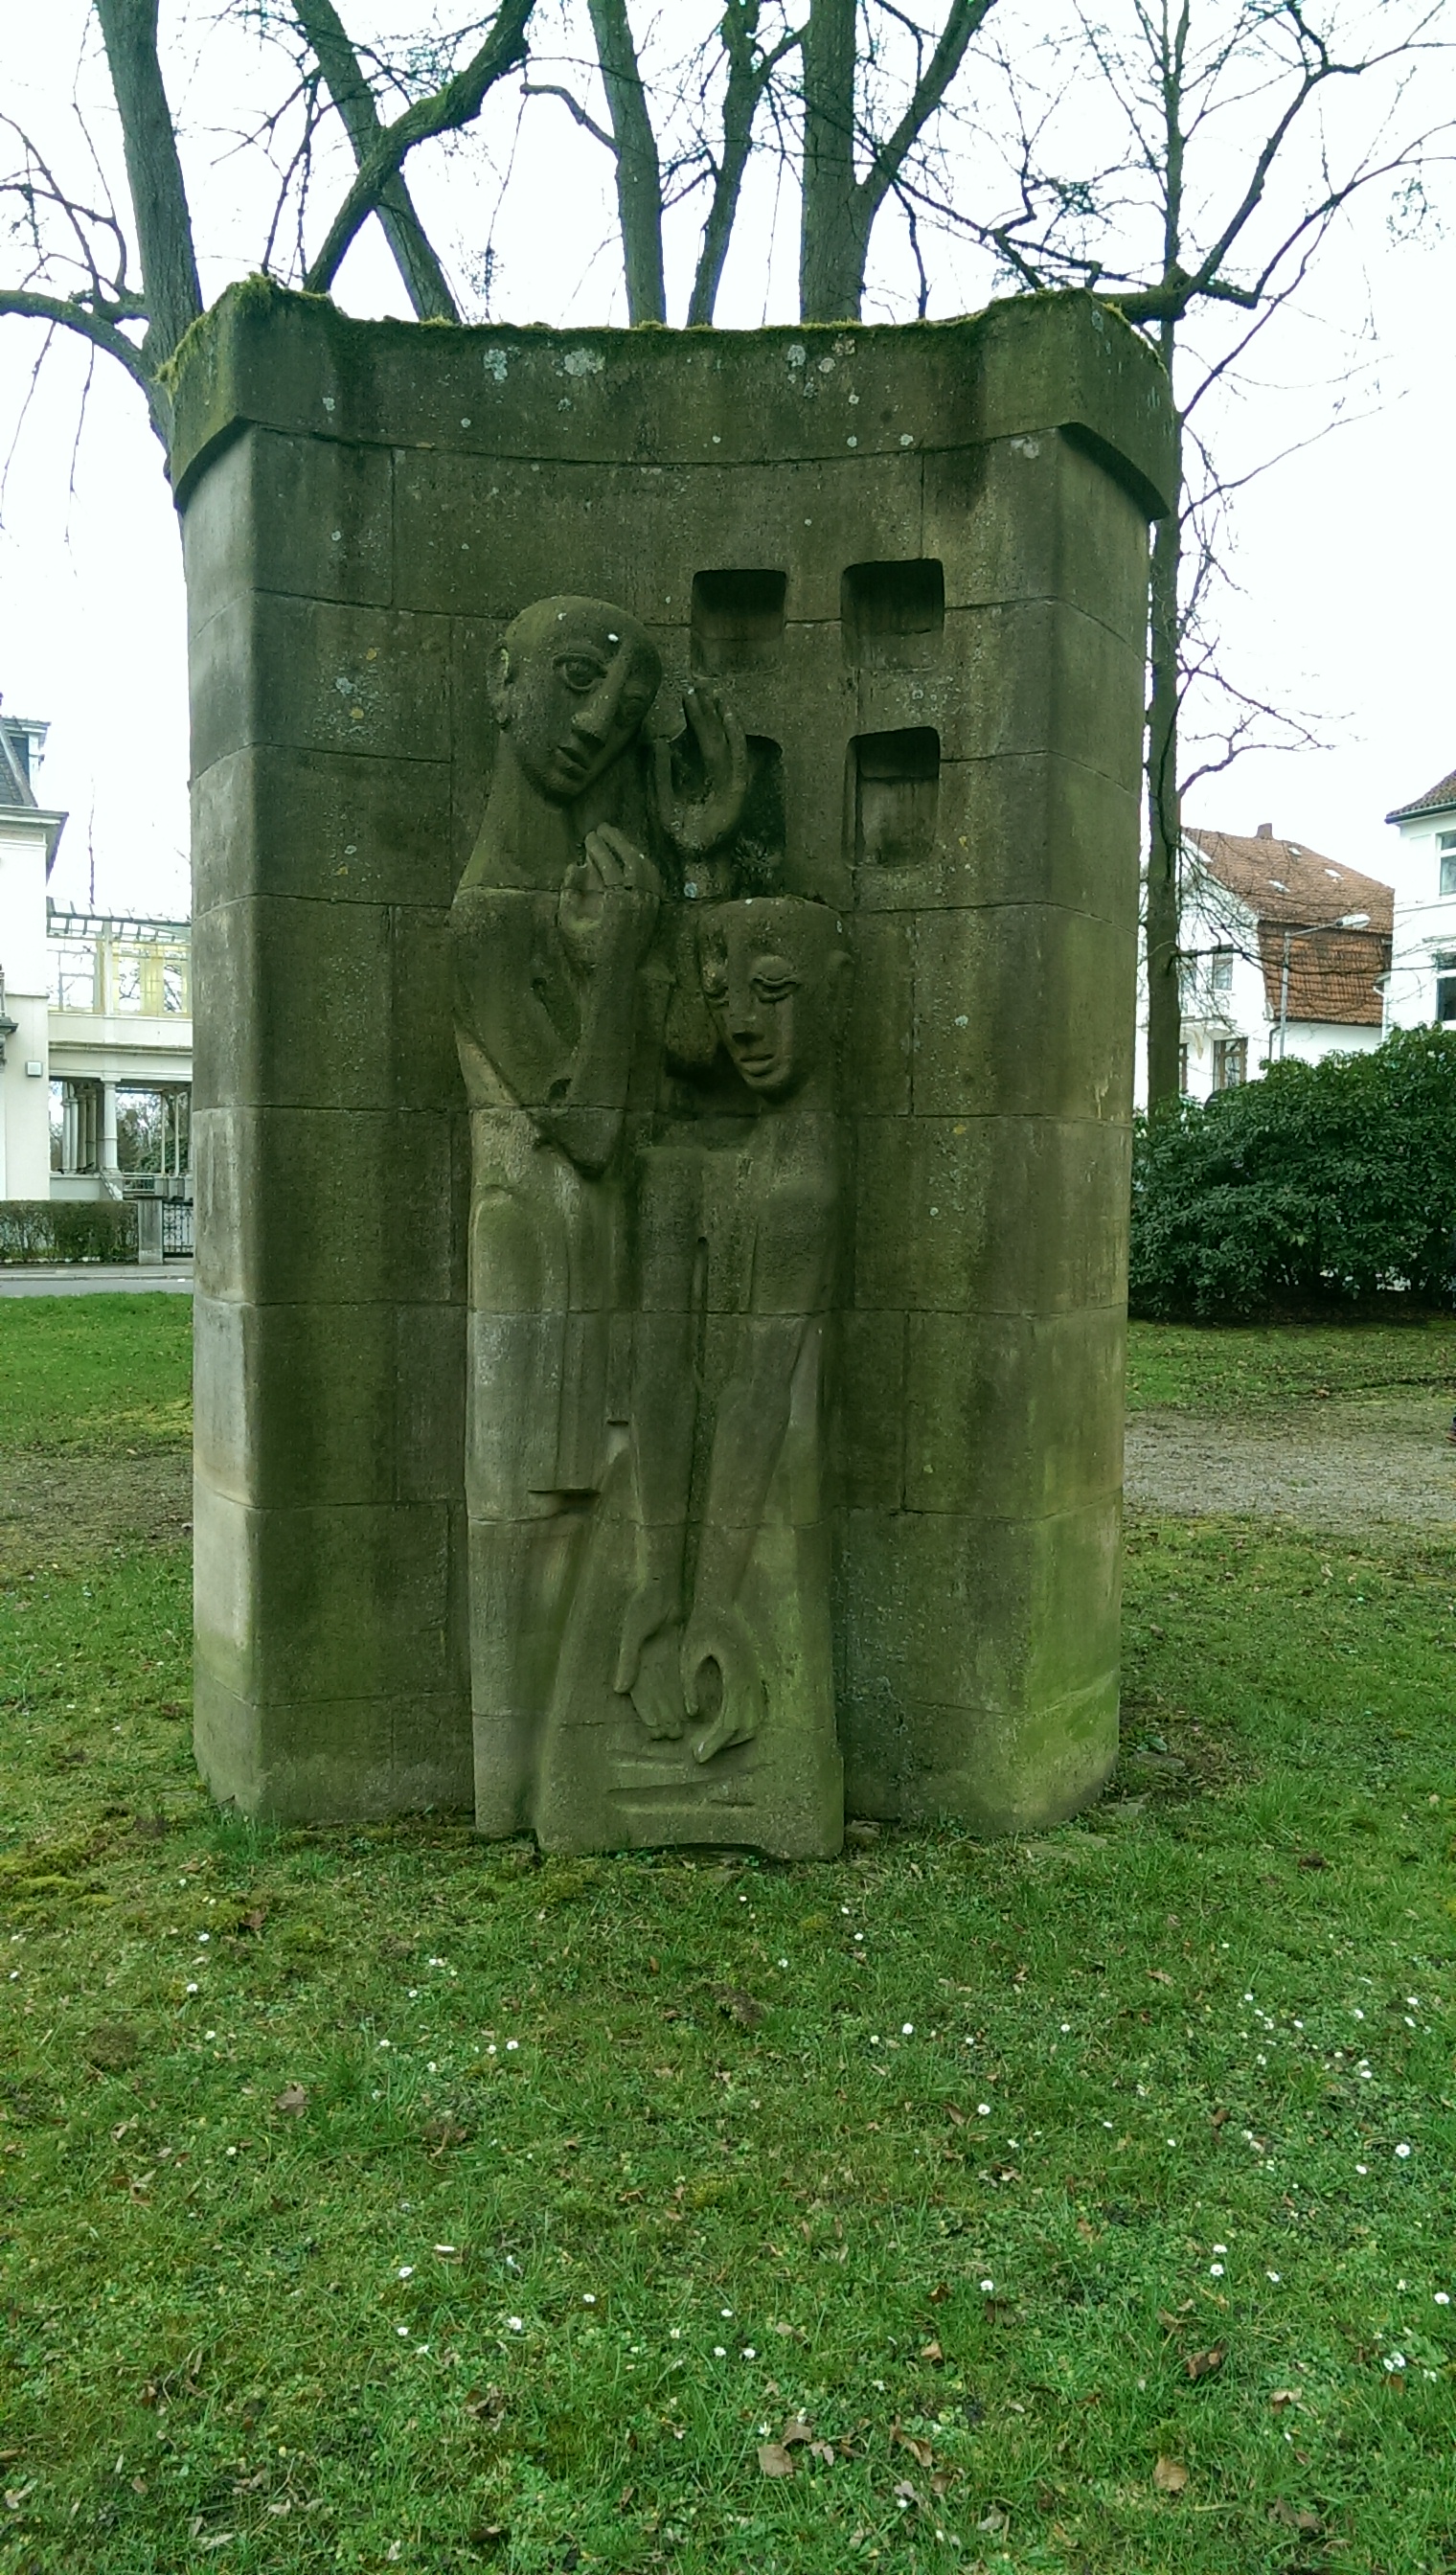 Bildhauer: Theodor Henke
Projektbeginn: 1966